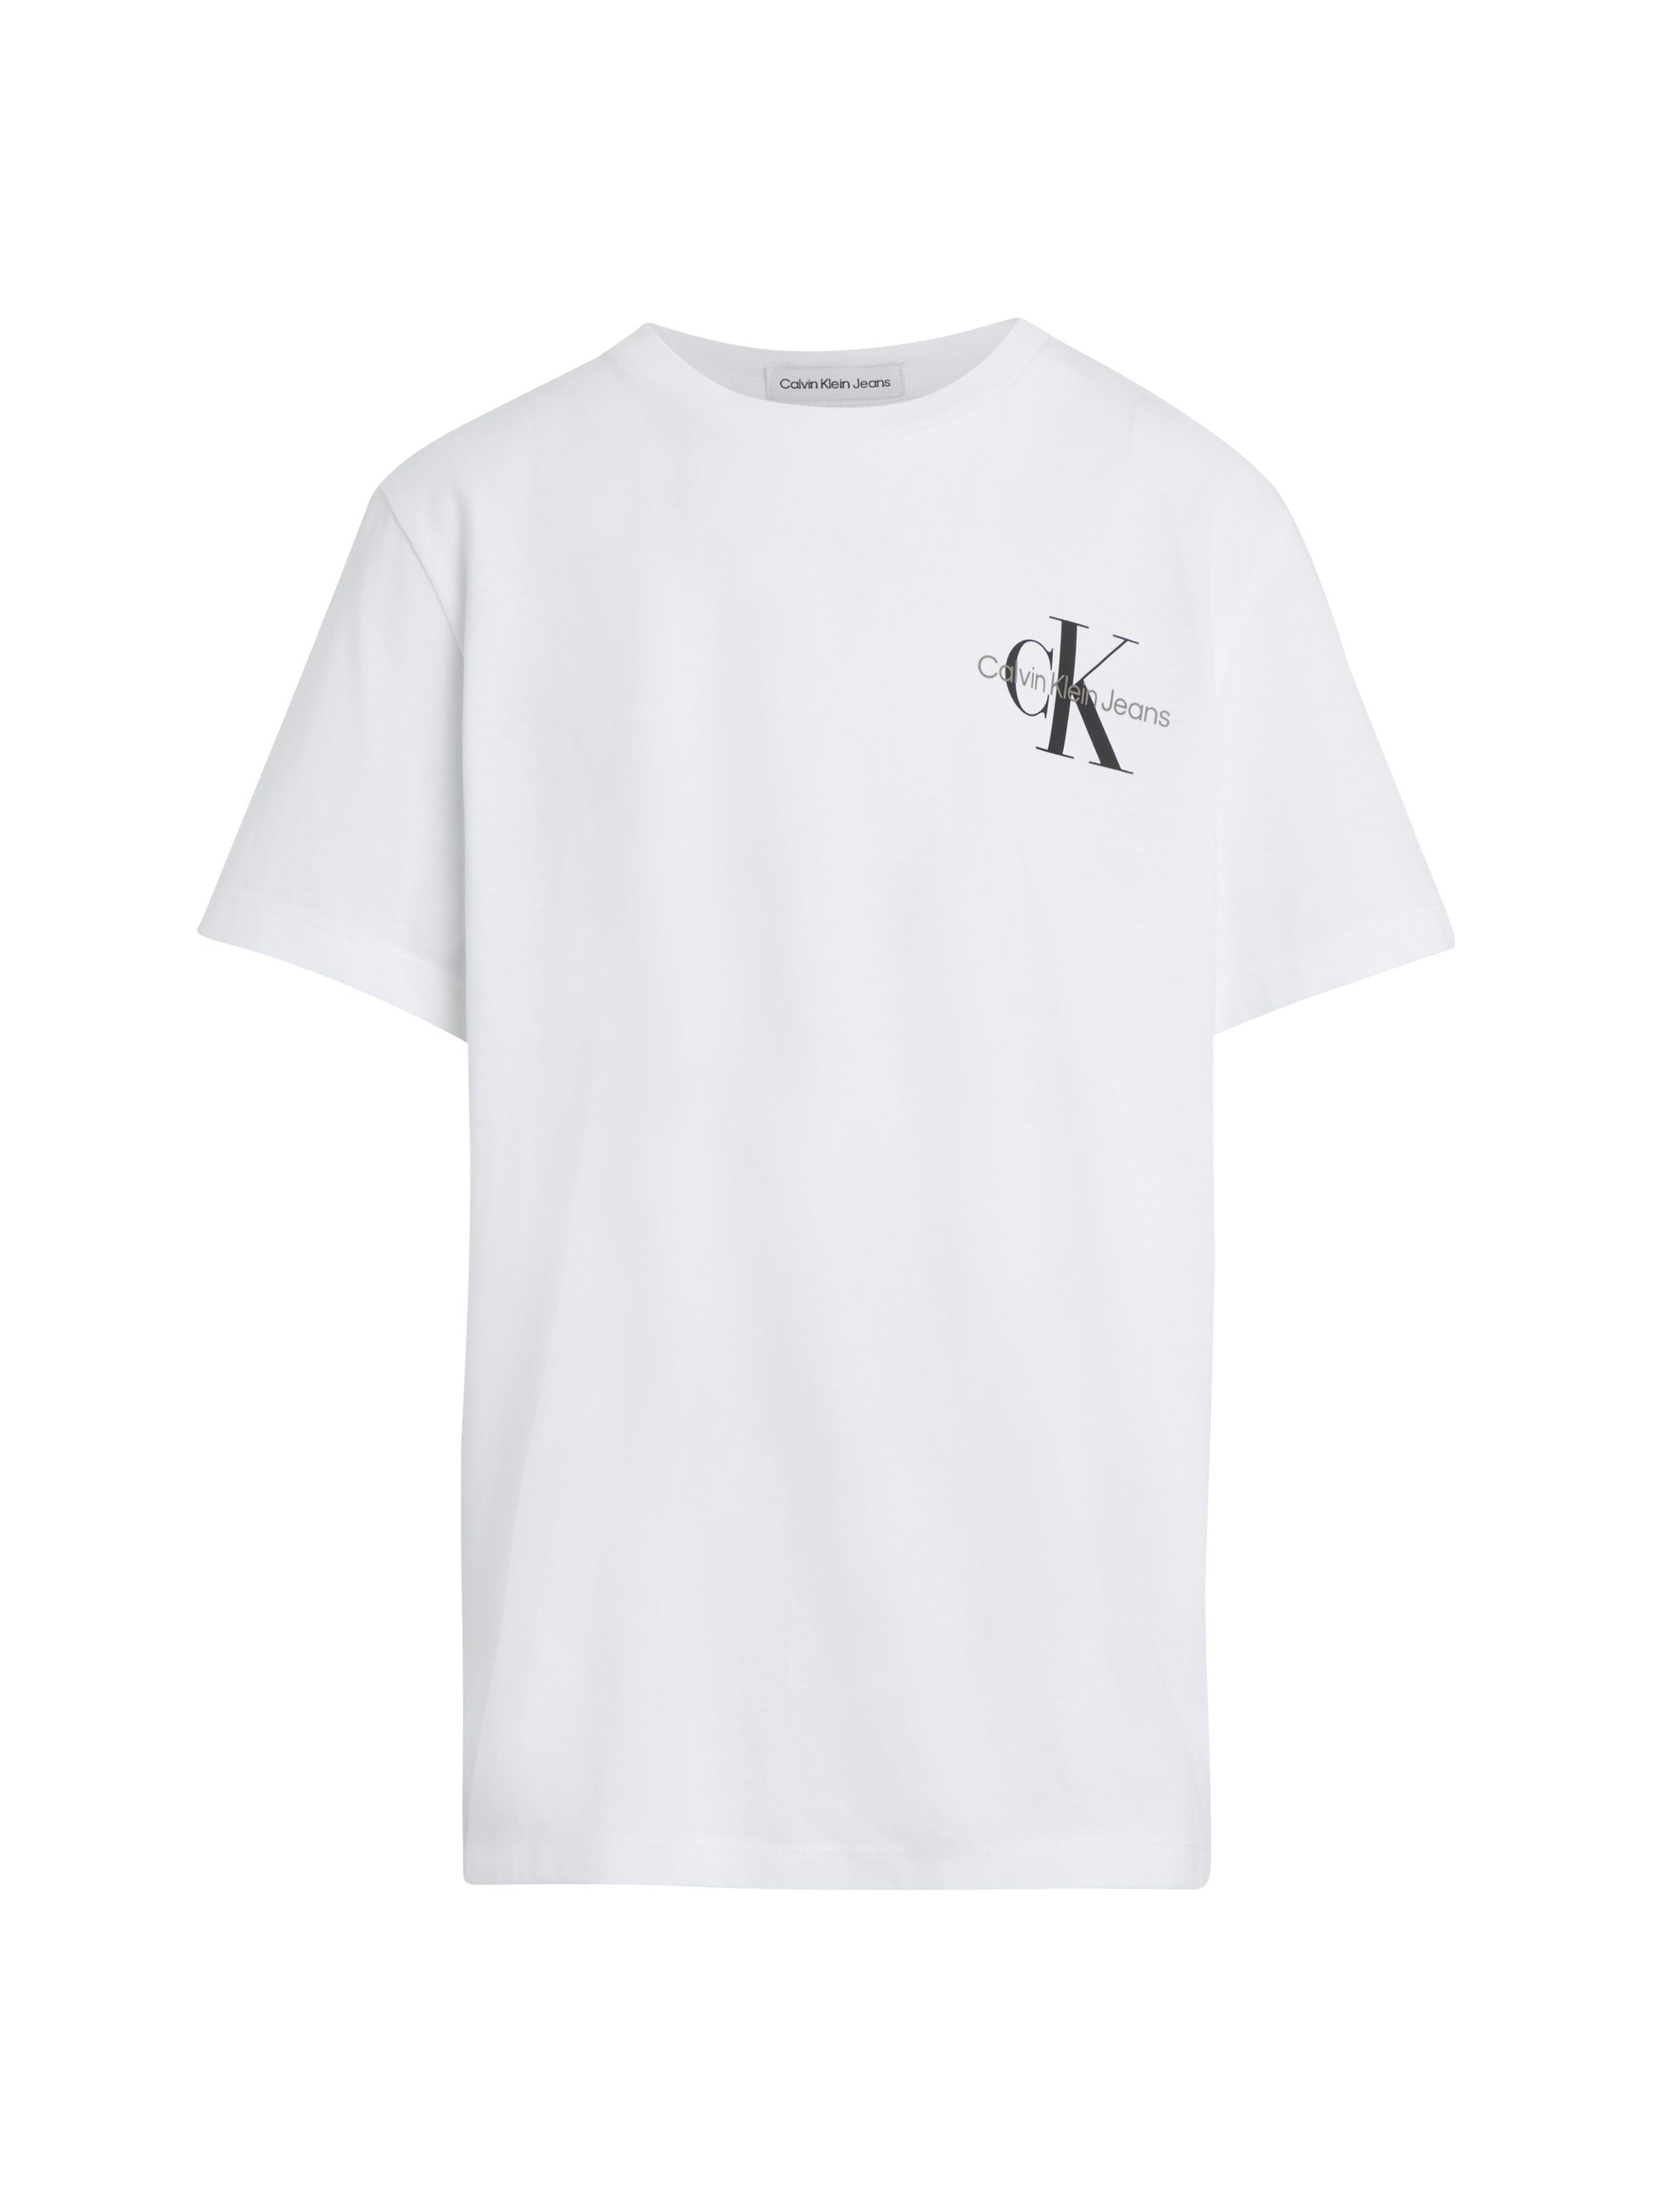 Calvin Klein Jeans MONOGRAM Bright White T-Shirt CHEST TOP